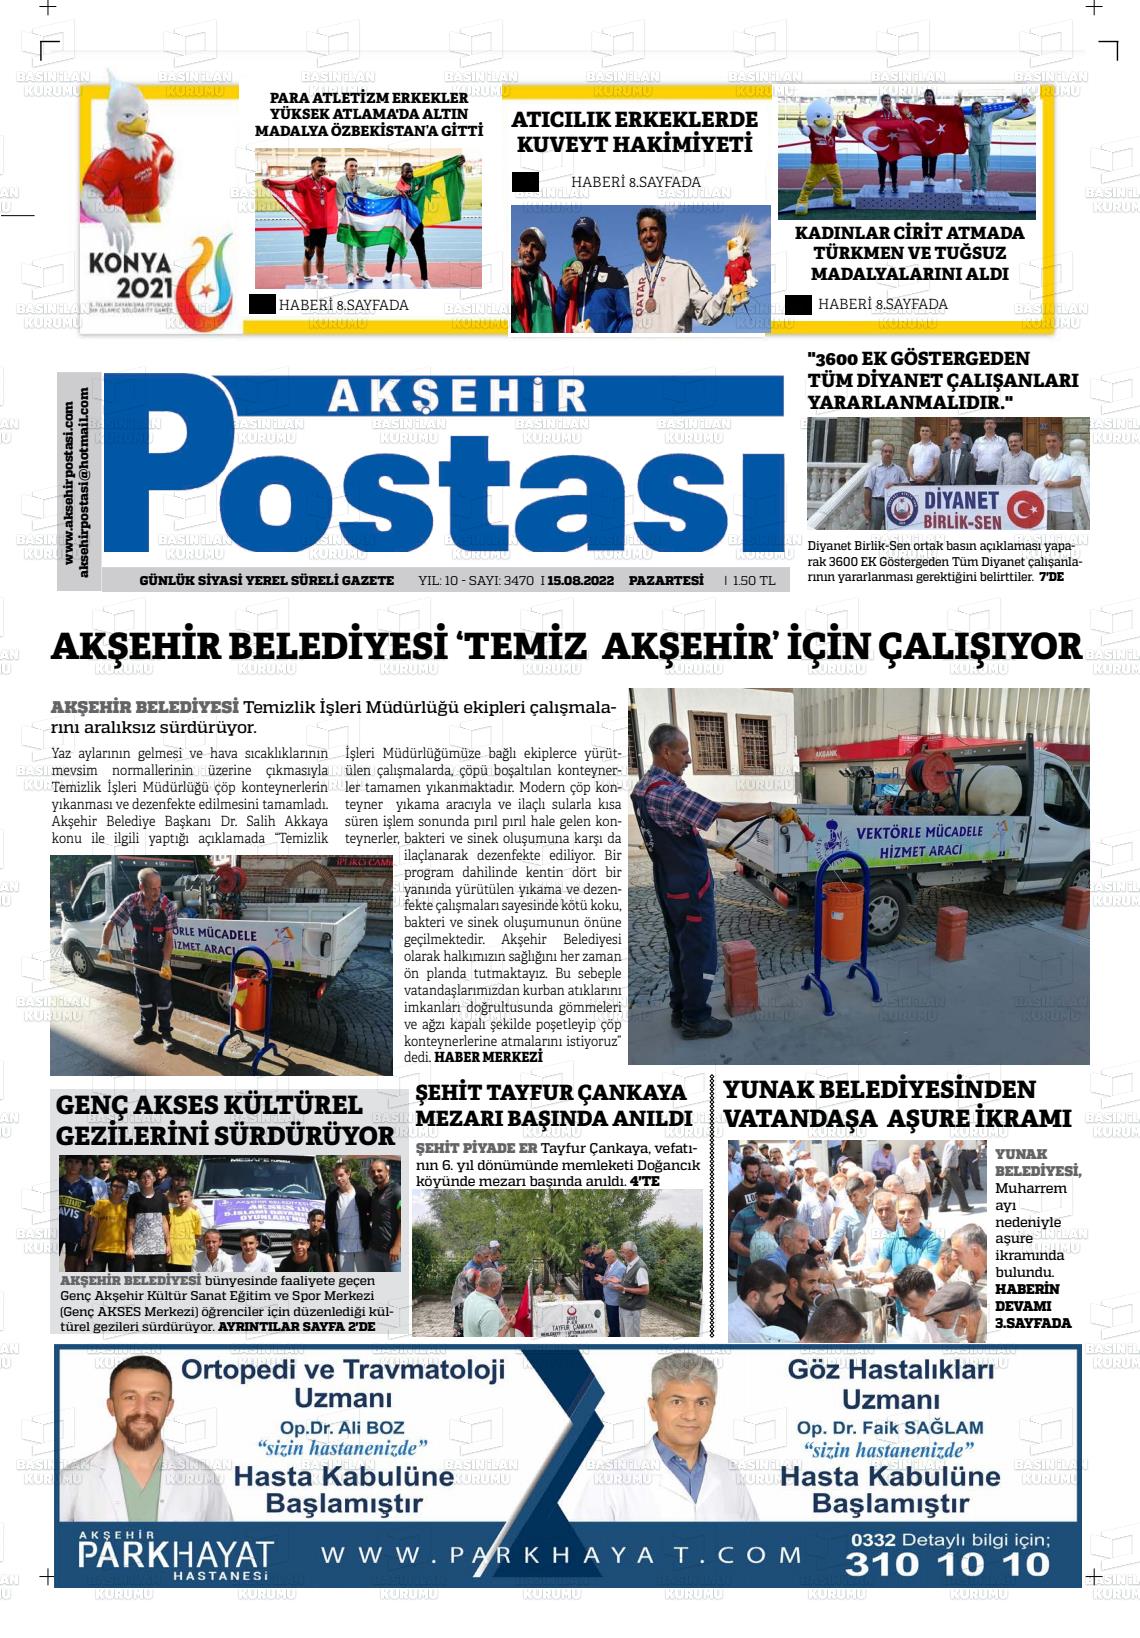 15 Ağustos 2022 Akşehir Postasi Gazete Manşeti